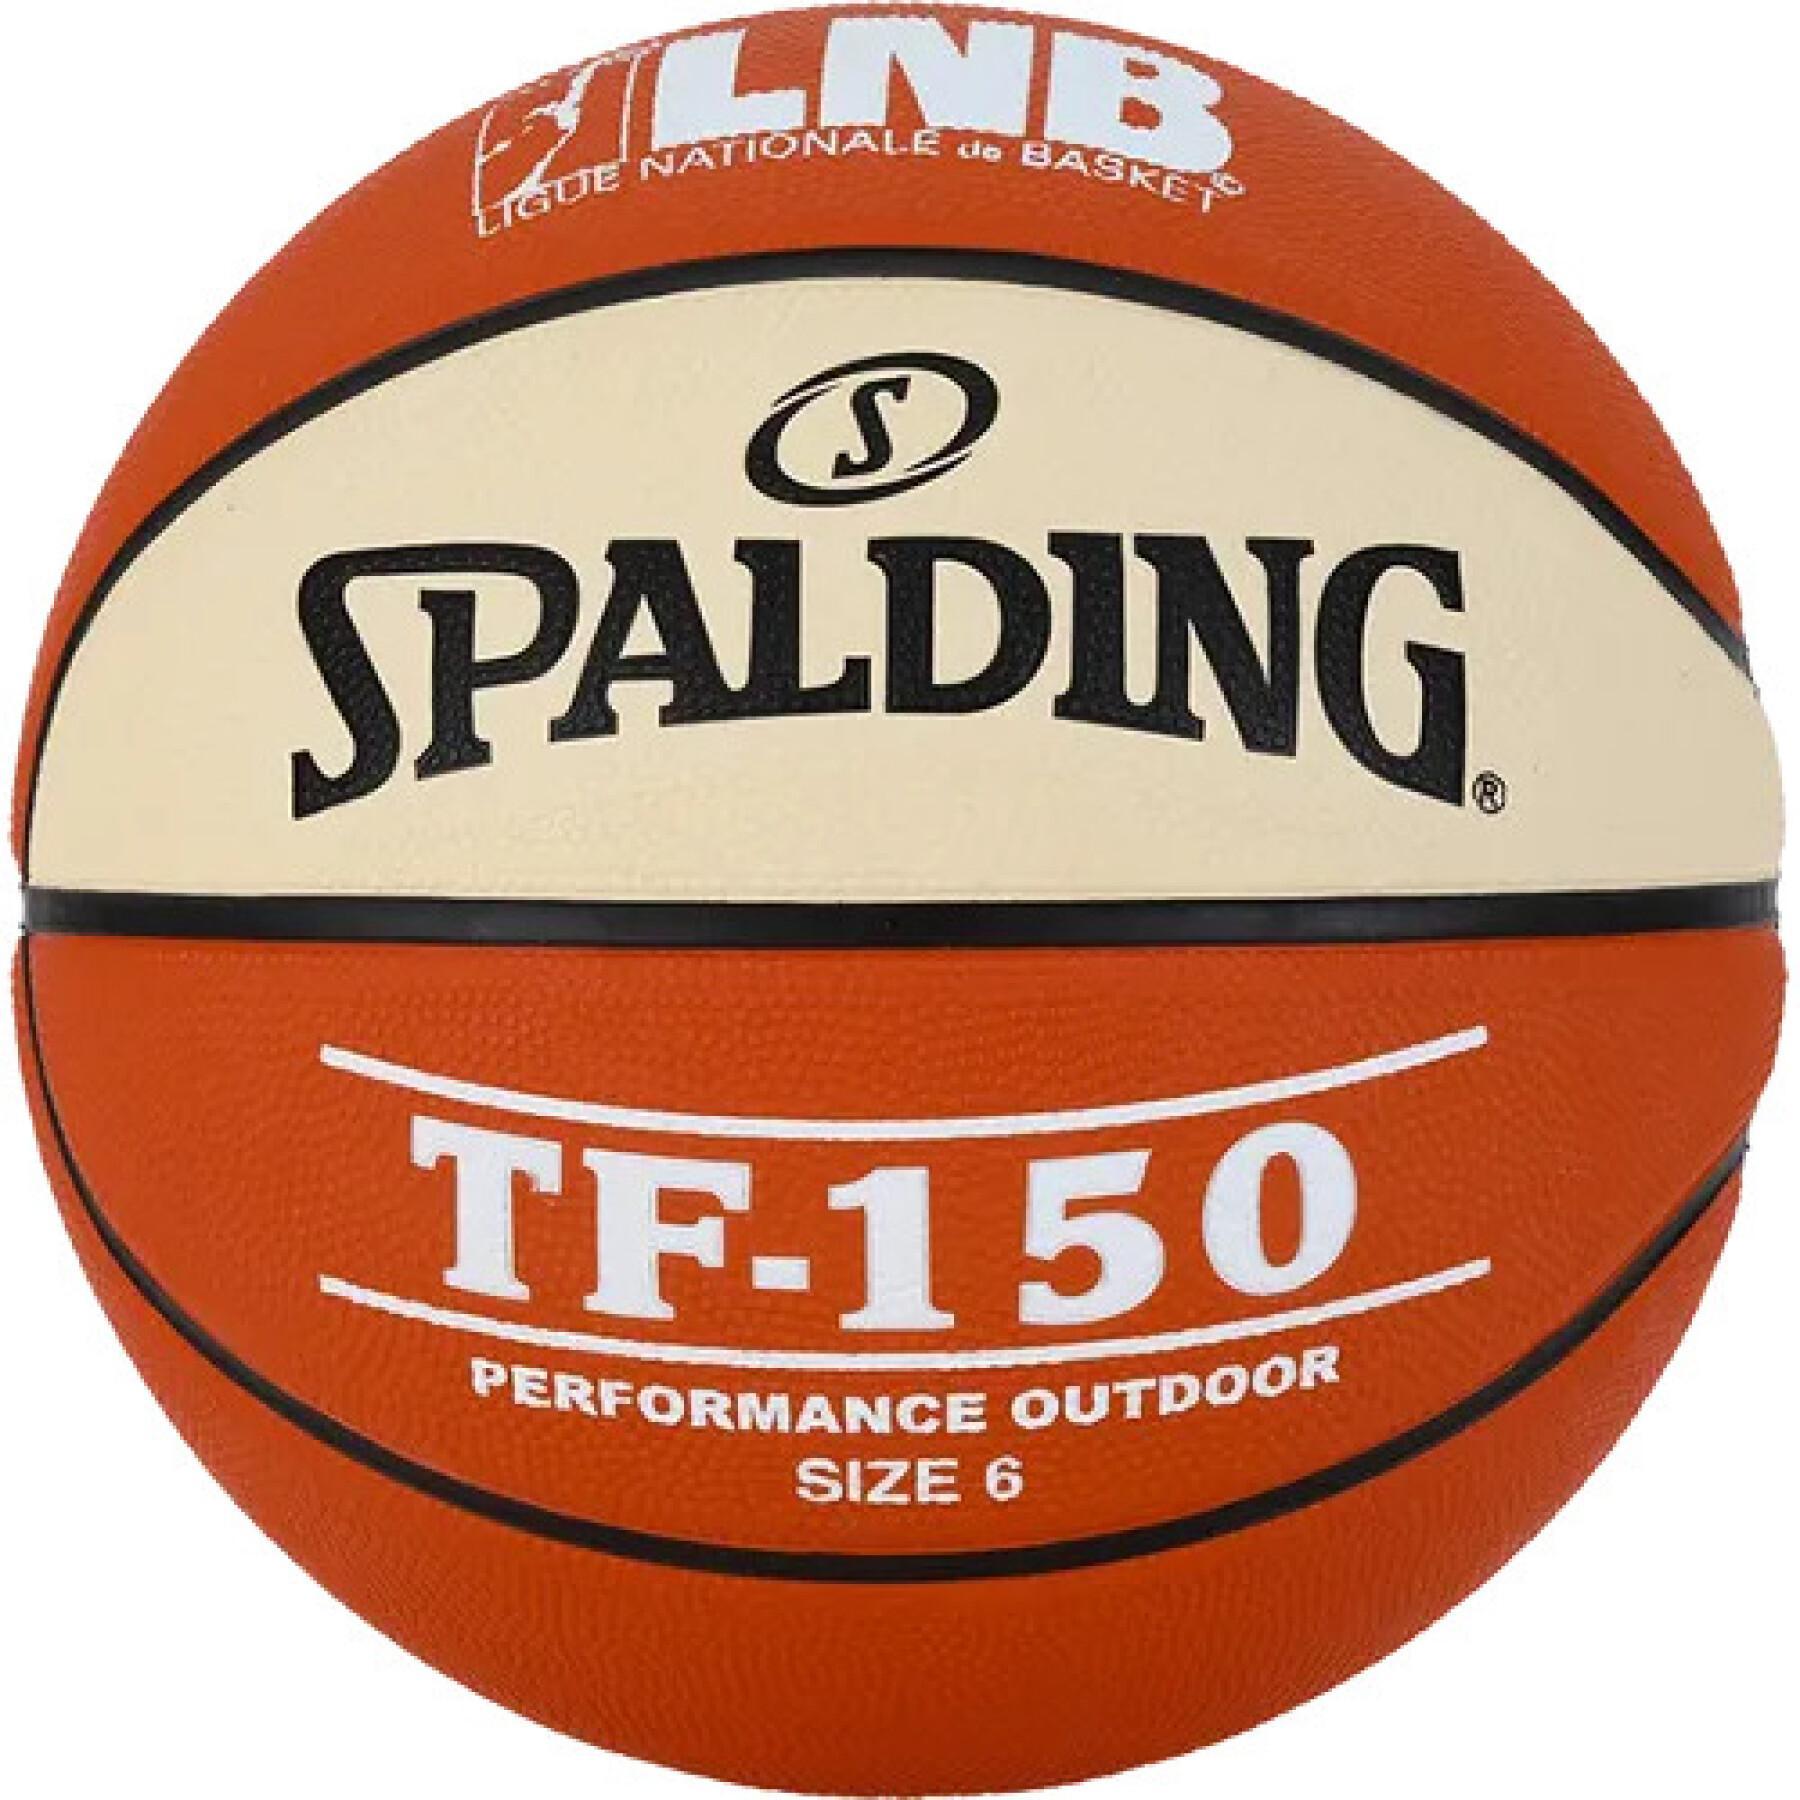 Balon Spalding LNB Tf150 (83-955z)